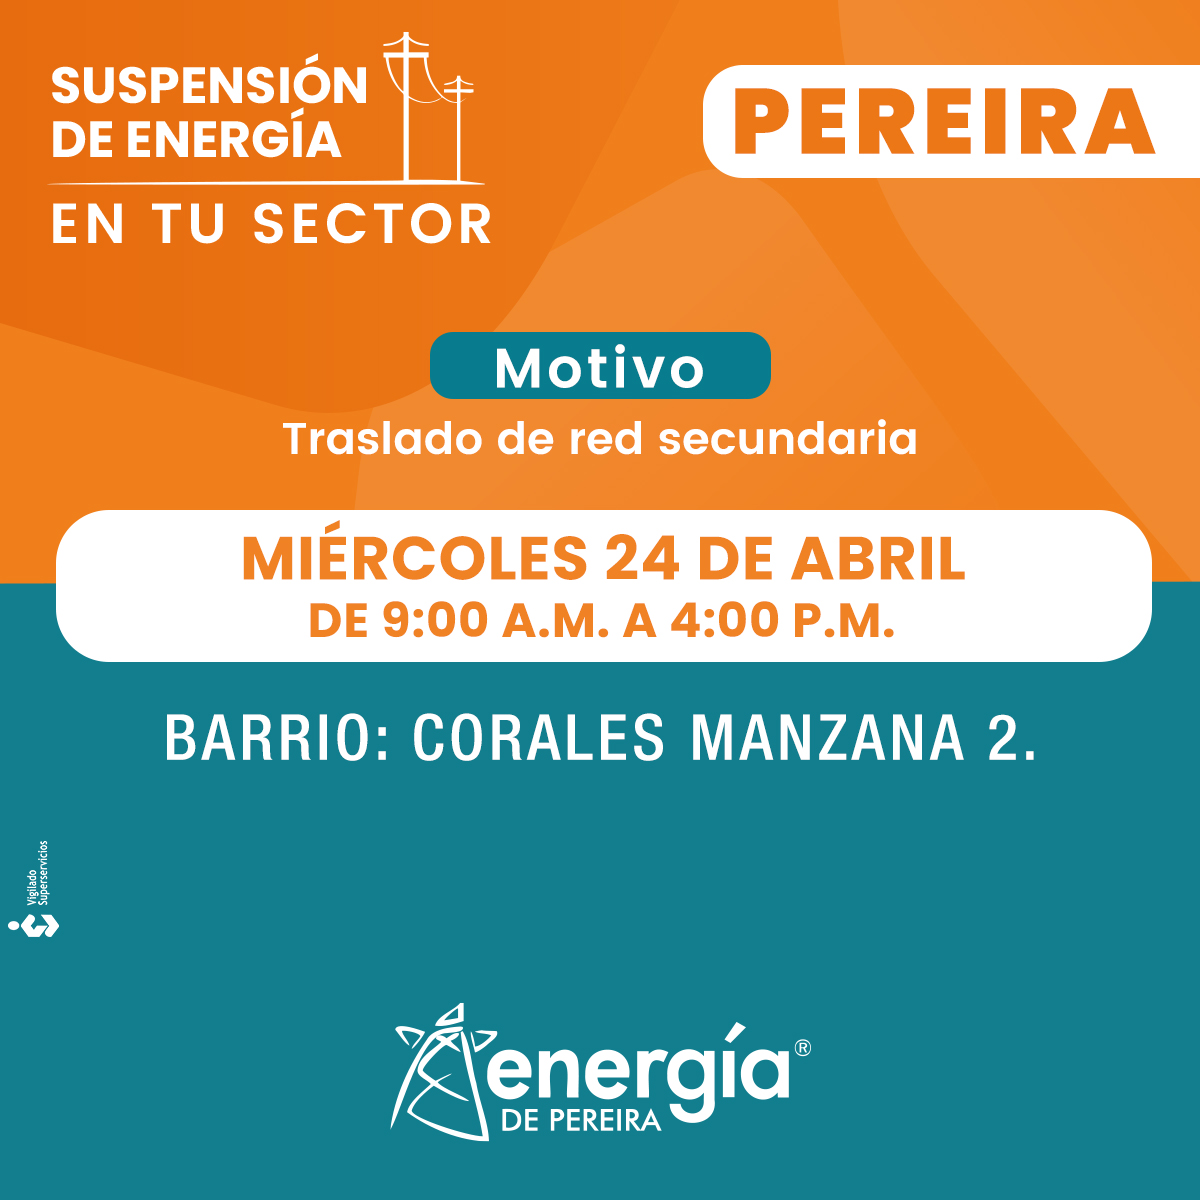 EnergiaPereira tweet picture